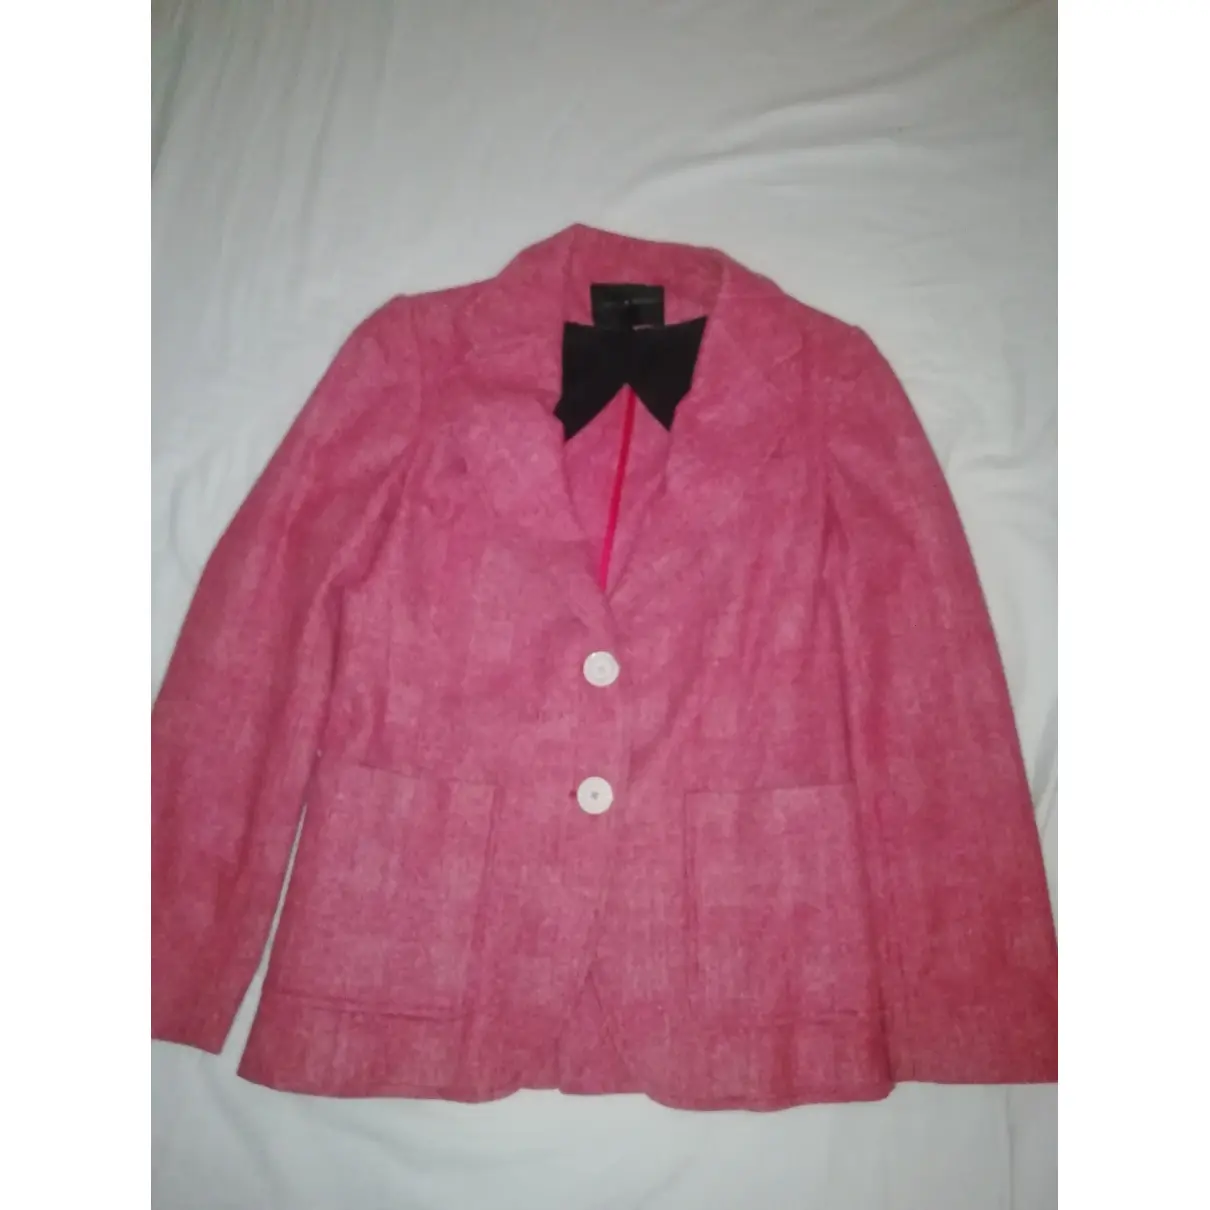 Buy Isabel Marant Wool suit jacket online - Vintage